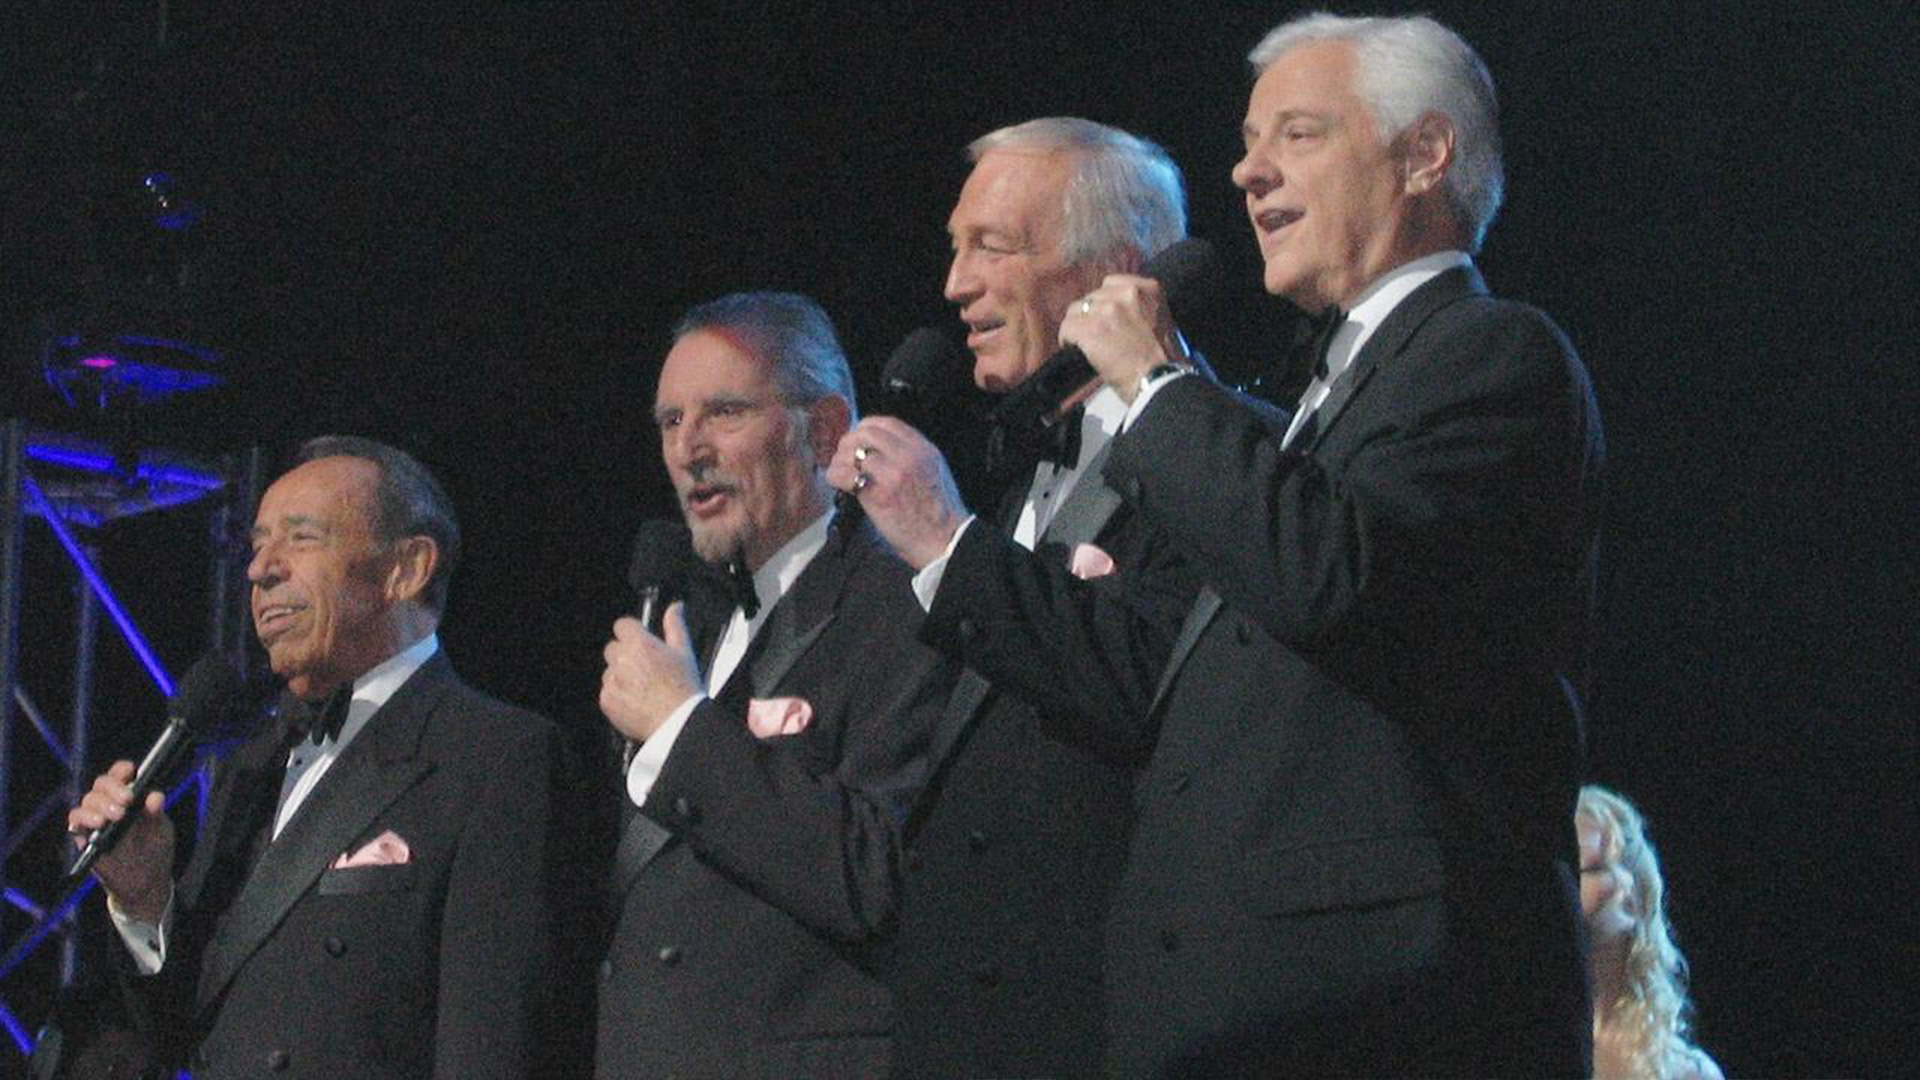 Four men on stage sing.